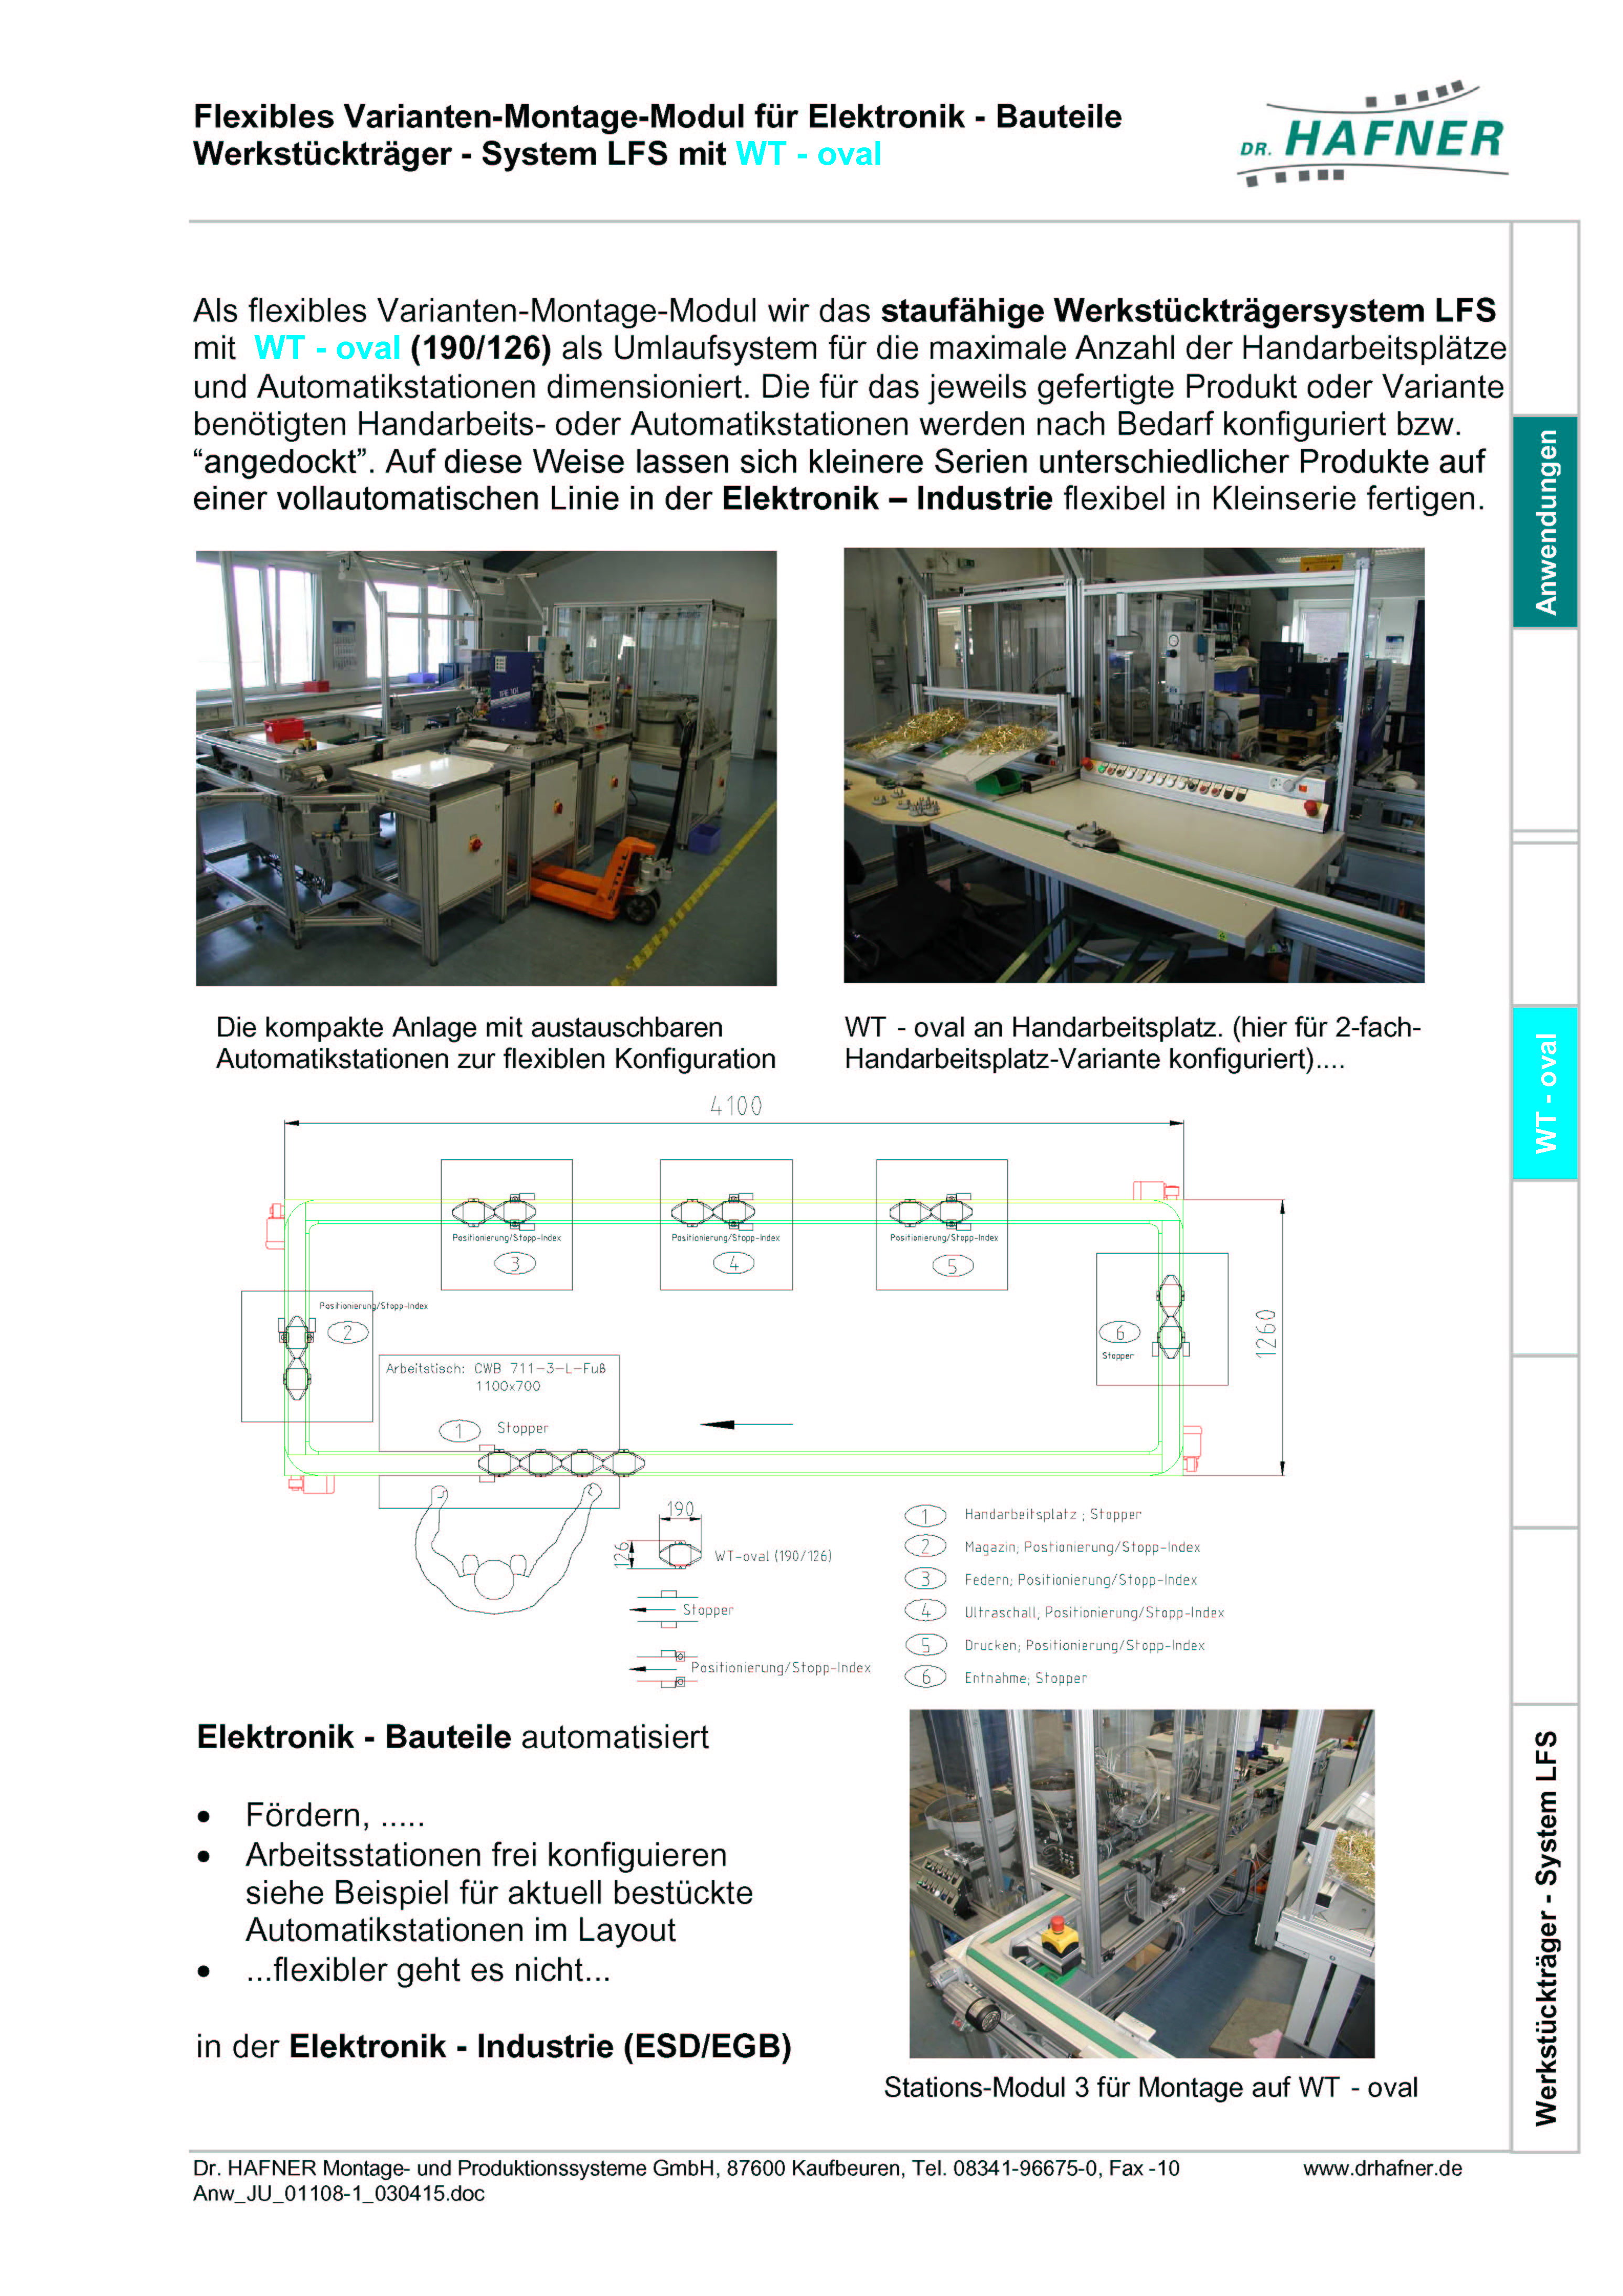 Dr. HAFNER_PKWP_26 Flexibles Varianten Montage Modul Elektronik Werkstückträger